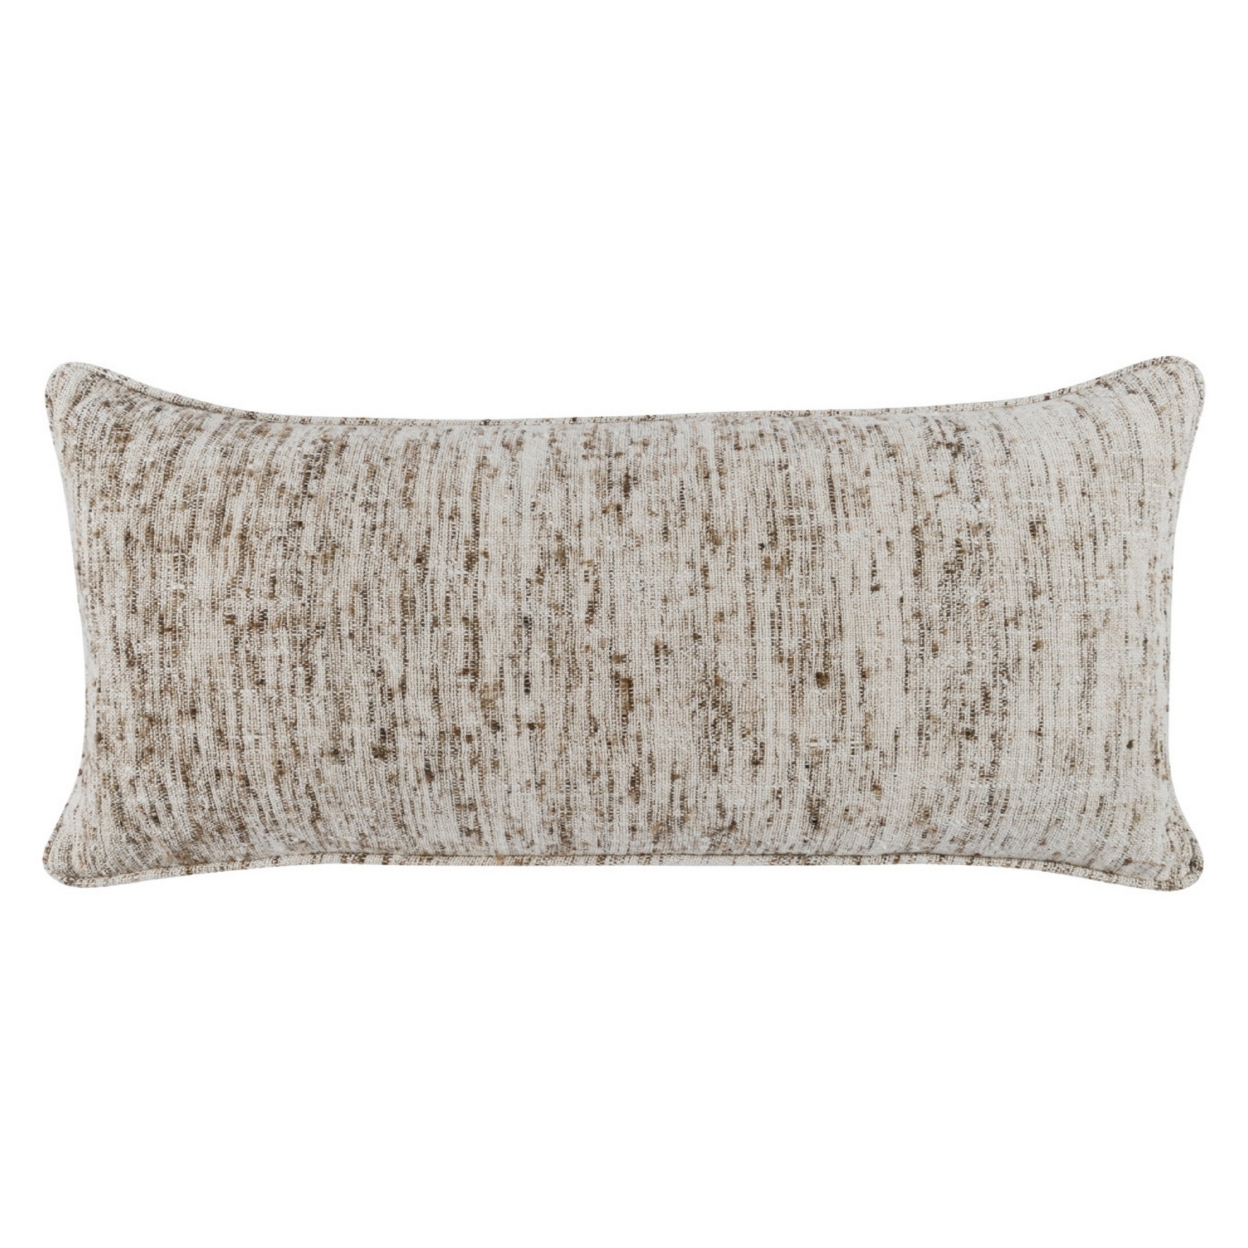 16 X 36 Accent Lumbar Throw Pillow, High Low Texture, Woven Fabric, Ivory, Saltoro Sherpi